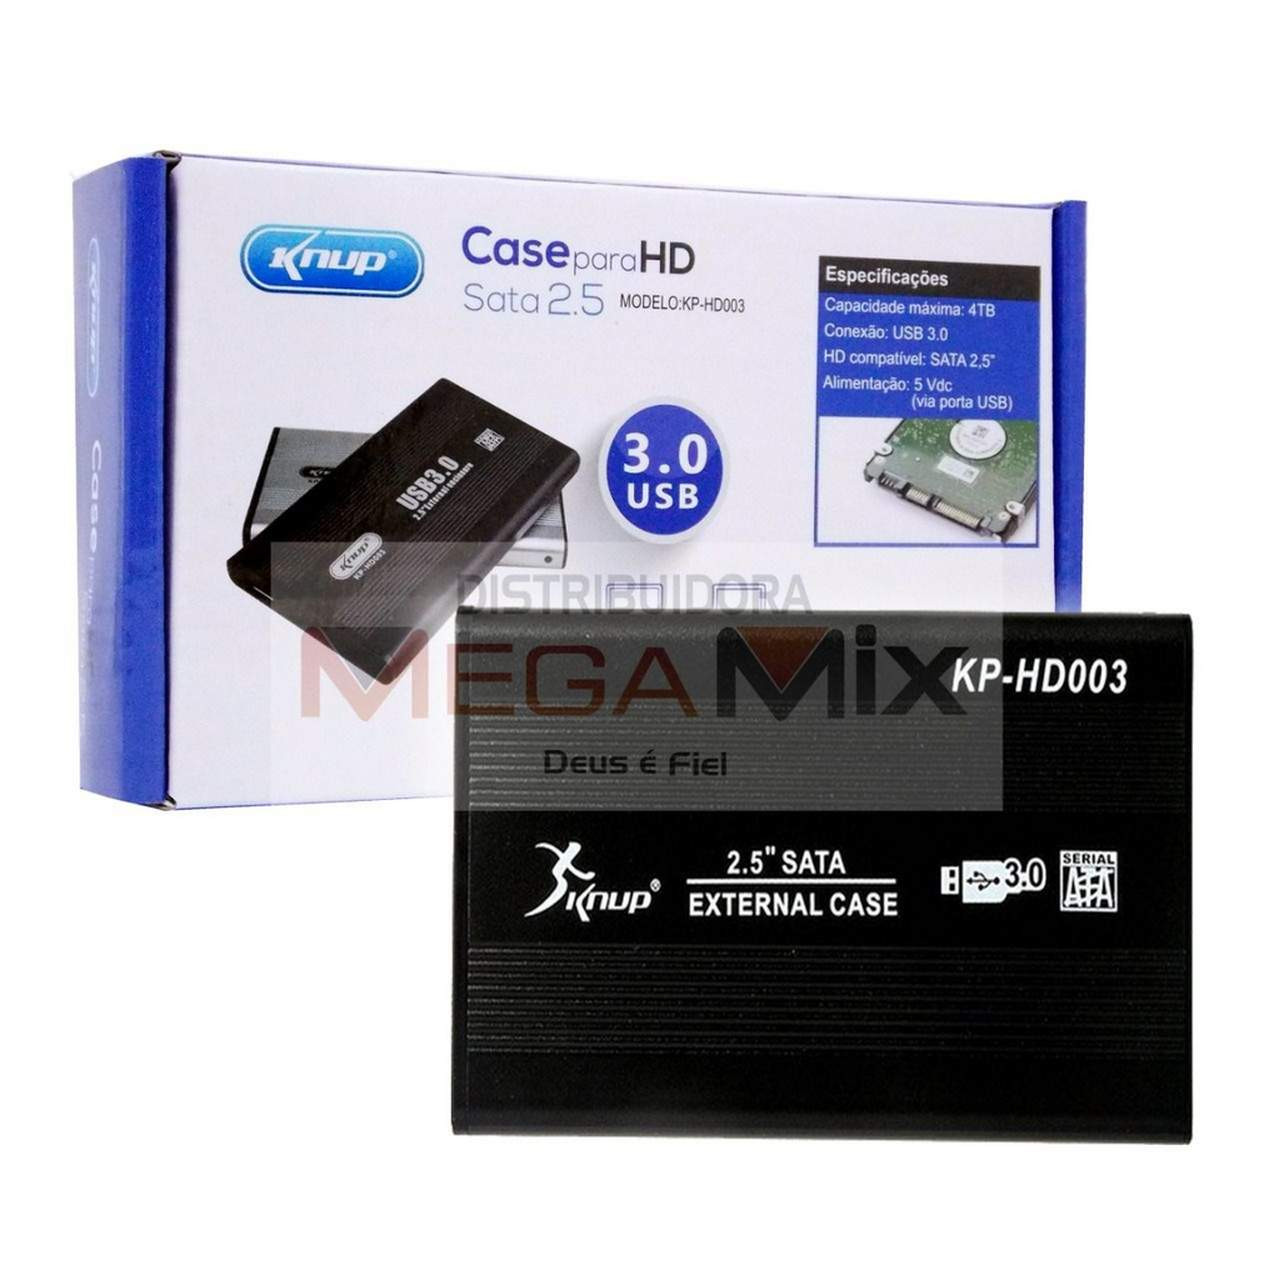 Case para HD Sata 2.5'' USB 3.0 Externo KP-HD003 - Knup